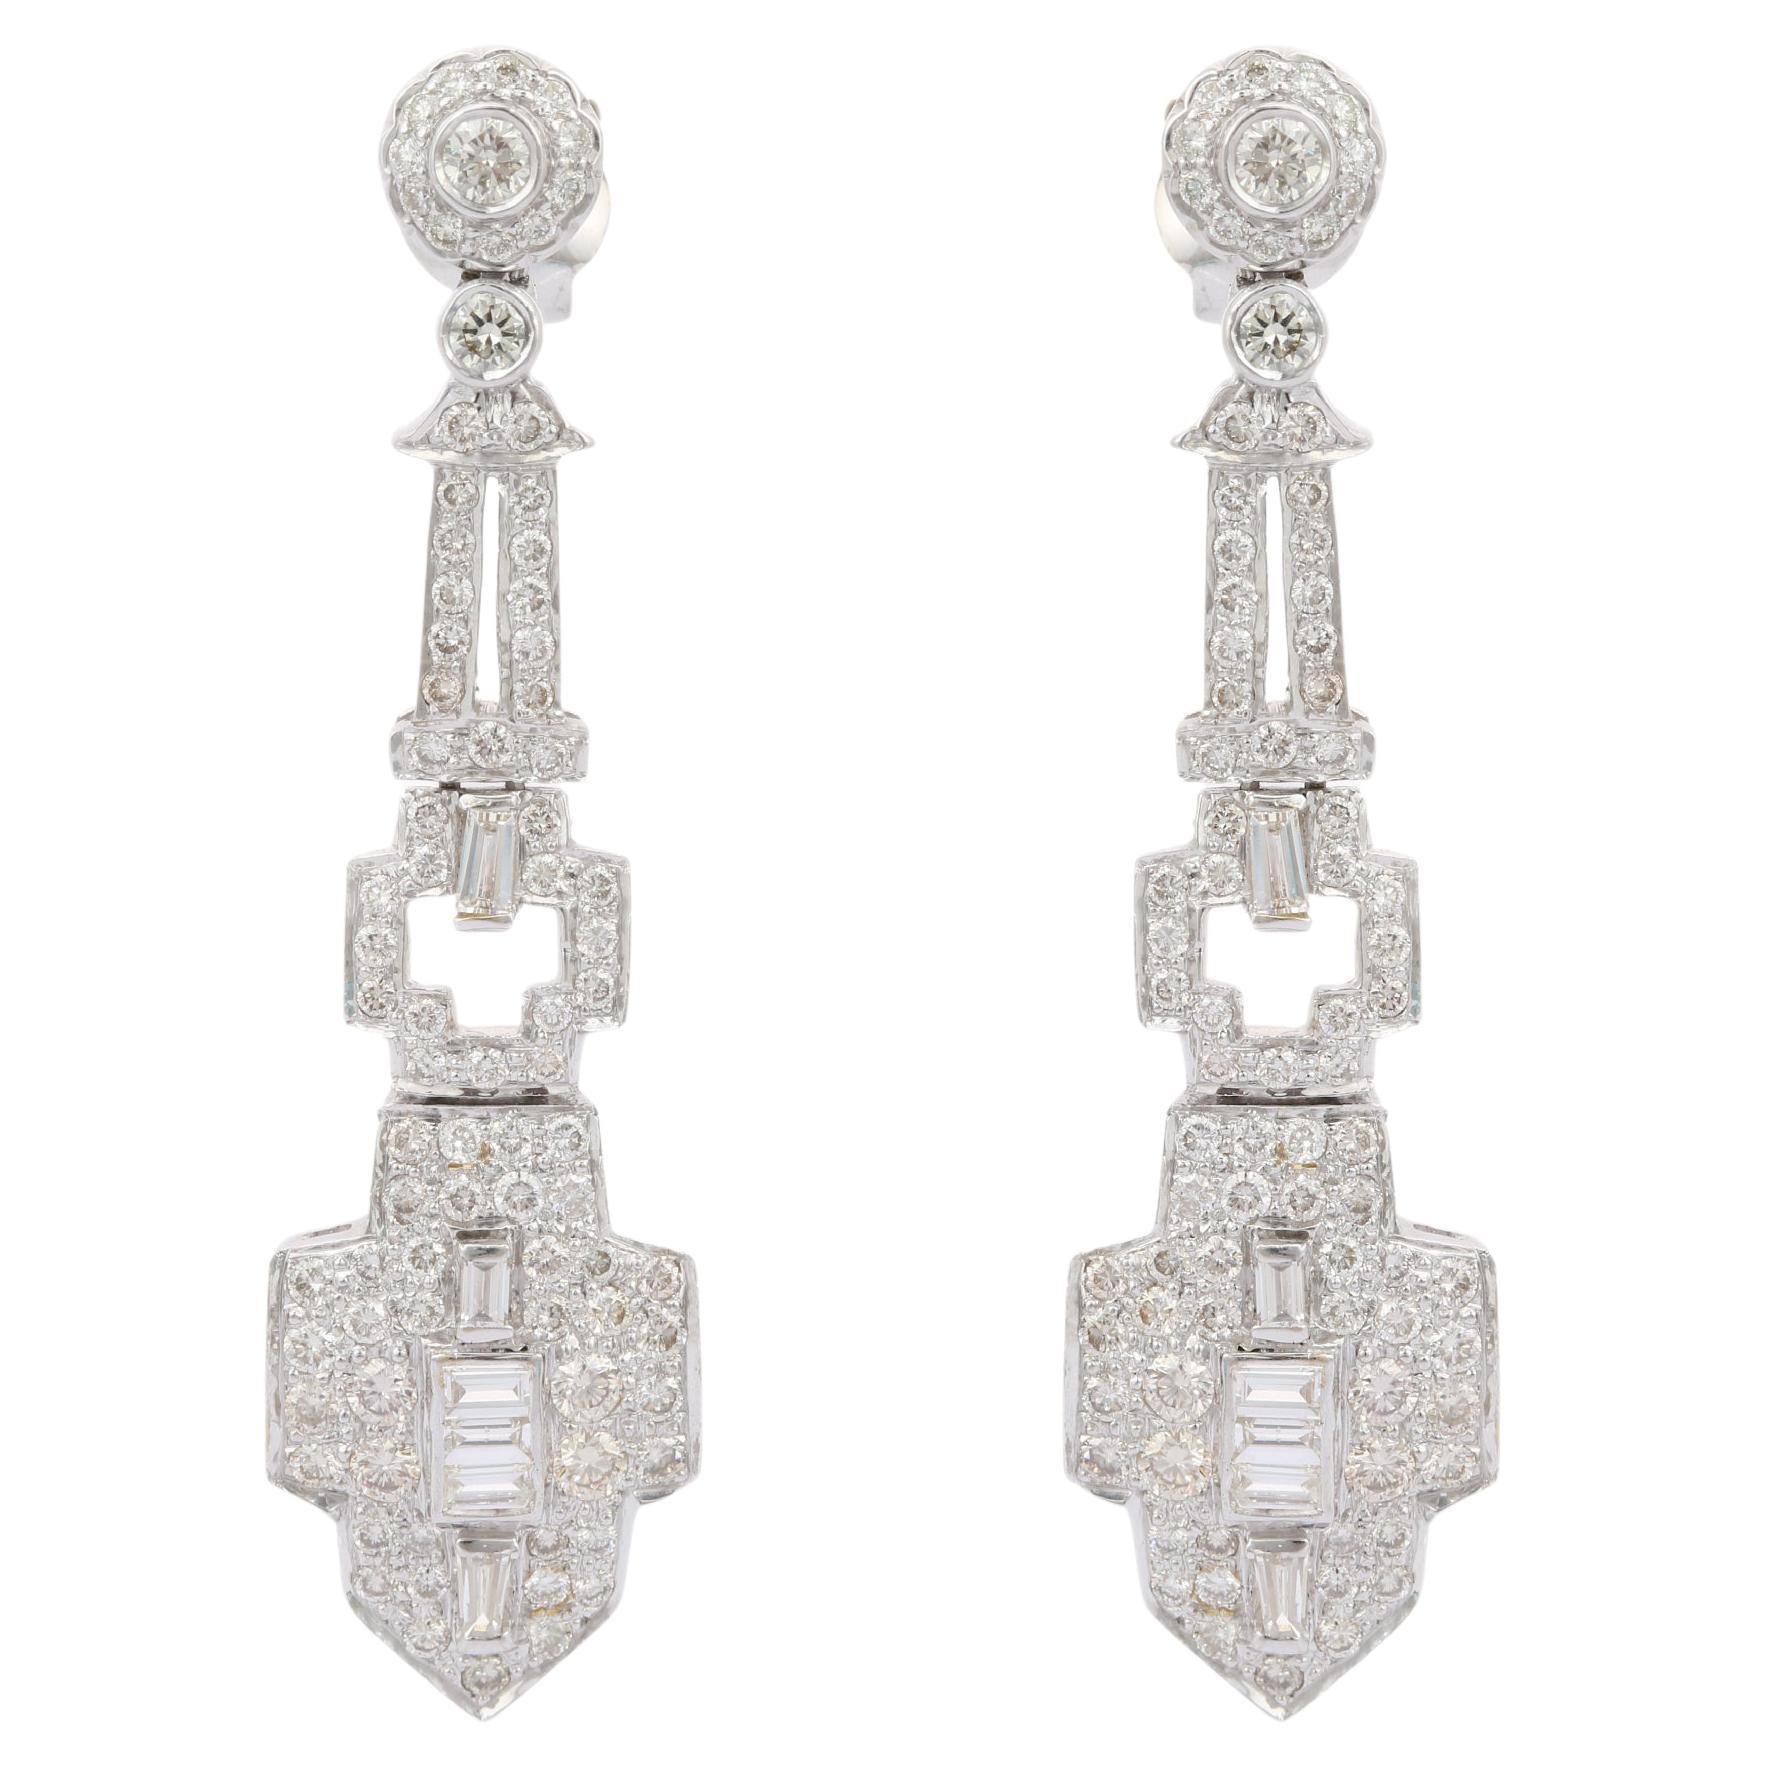 Exquisite Art Deco Diamond Dangle Earrings in 18k White Gold